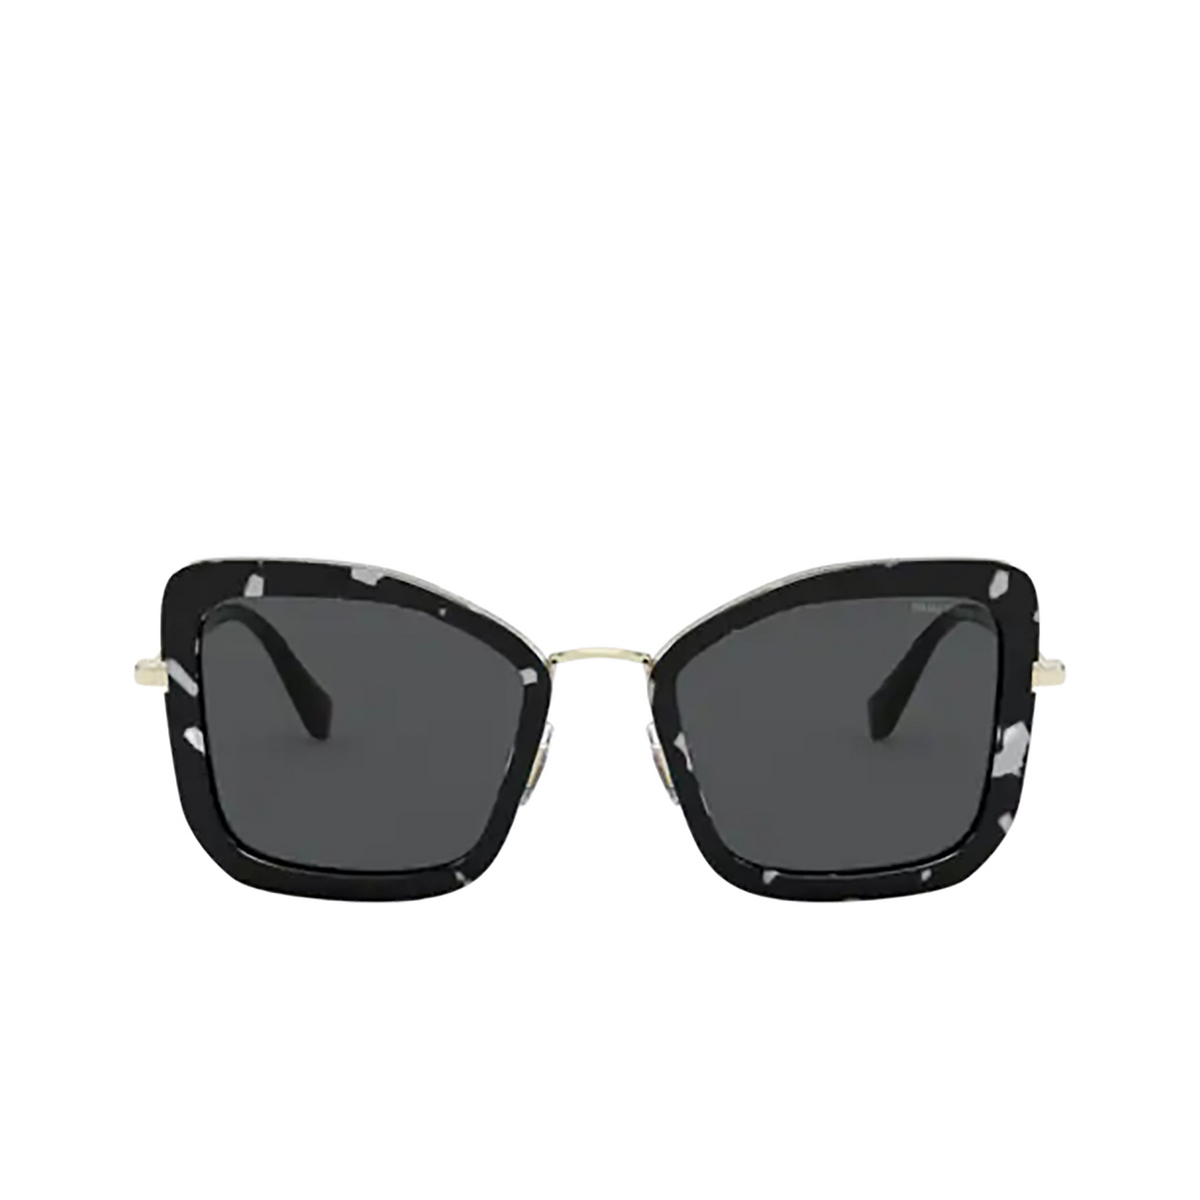 Miu Miu® Irregular Sunglasses: MU 55VS color PC75S0 Havana Black White - front view